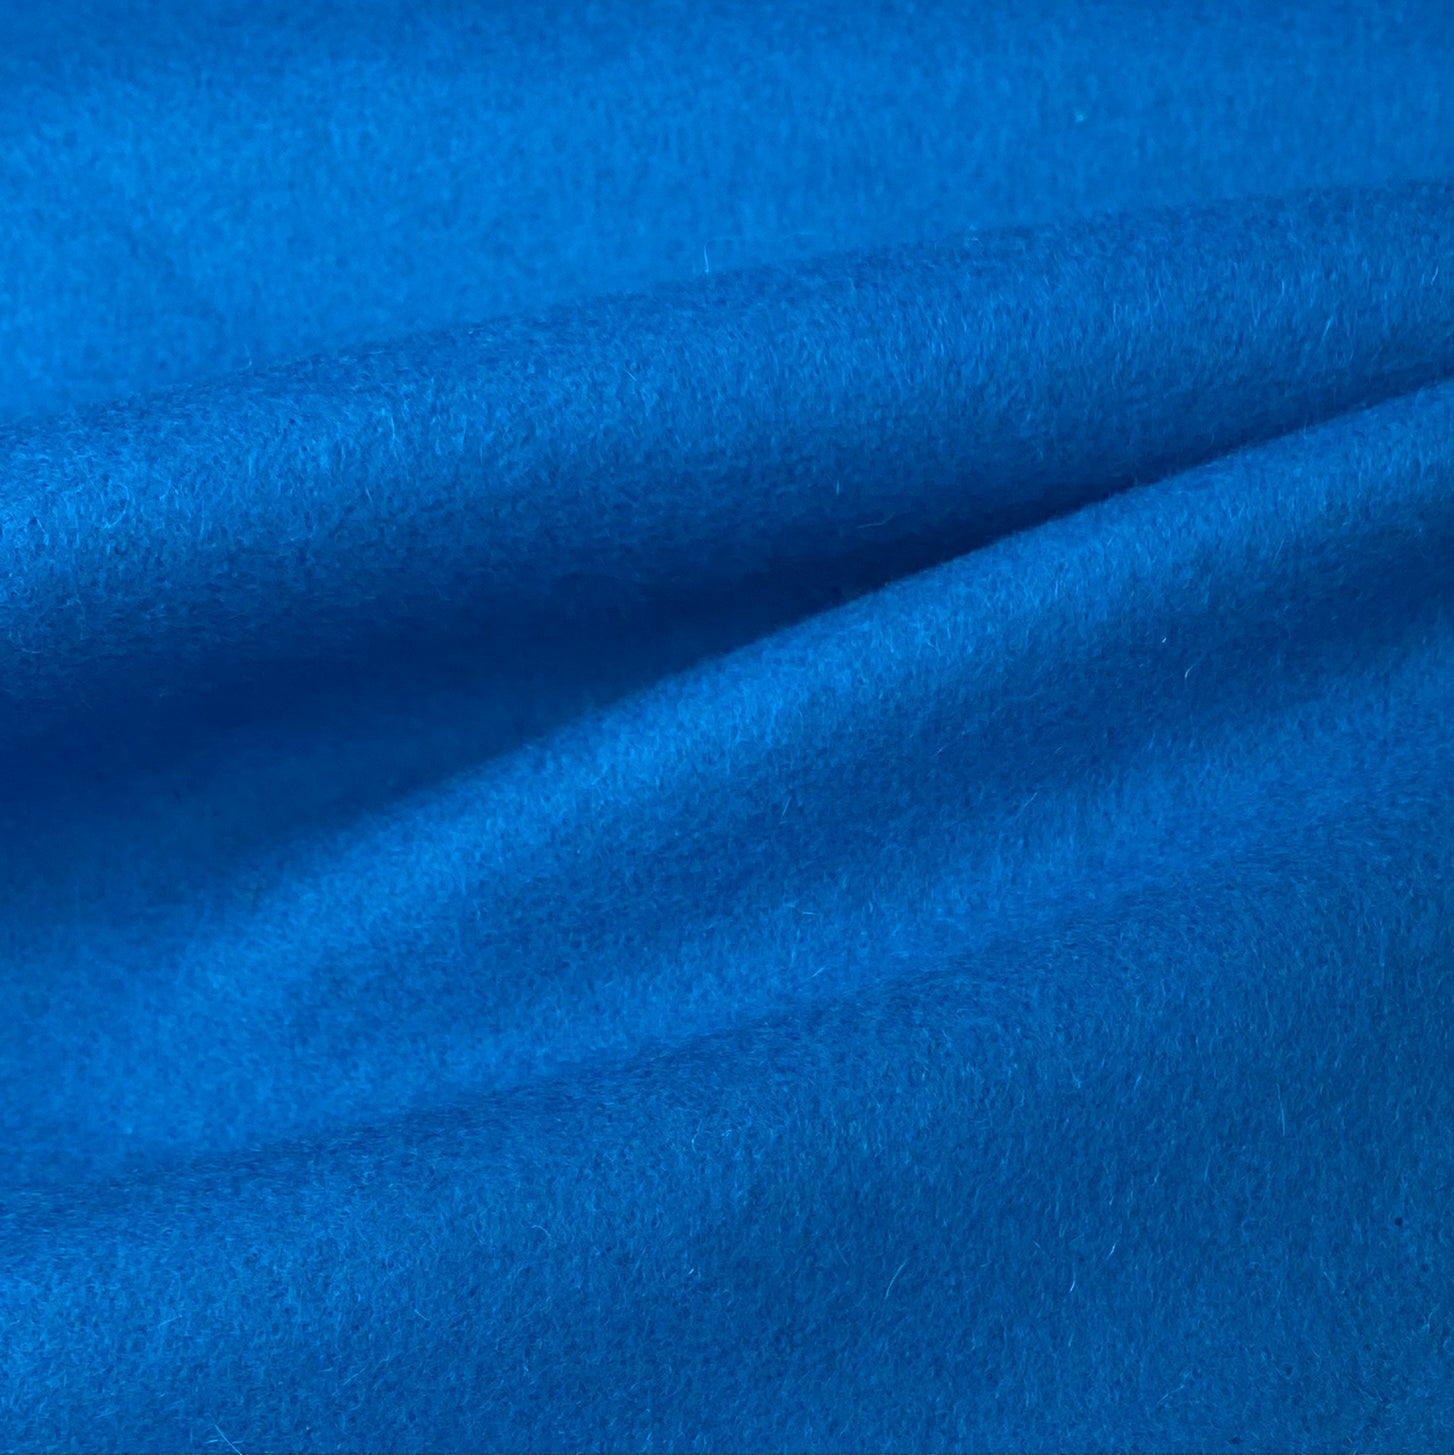 Melton Wool - Remnant - Turquoise